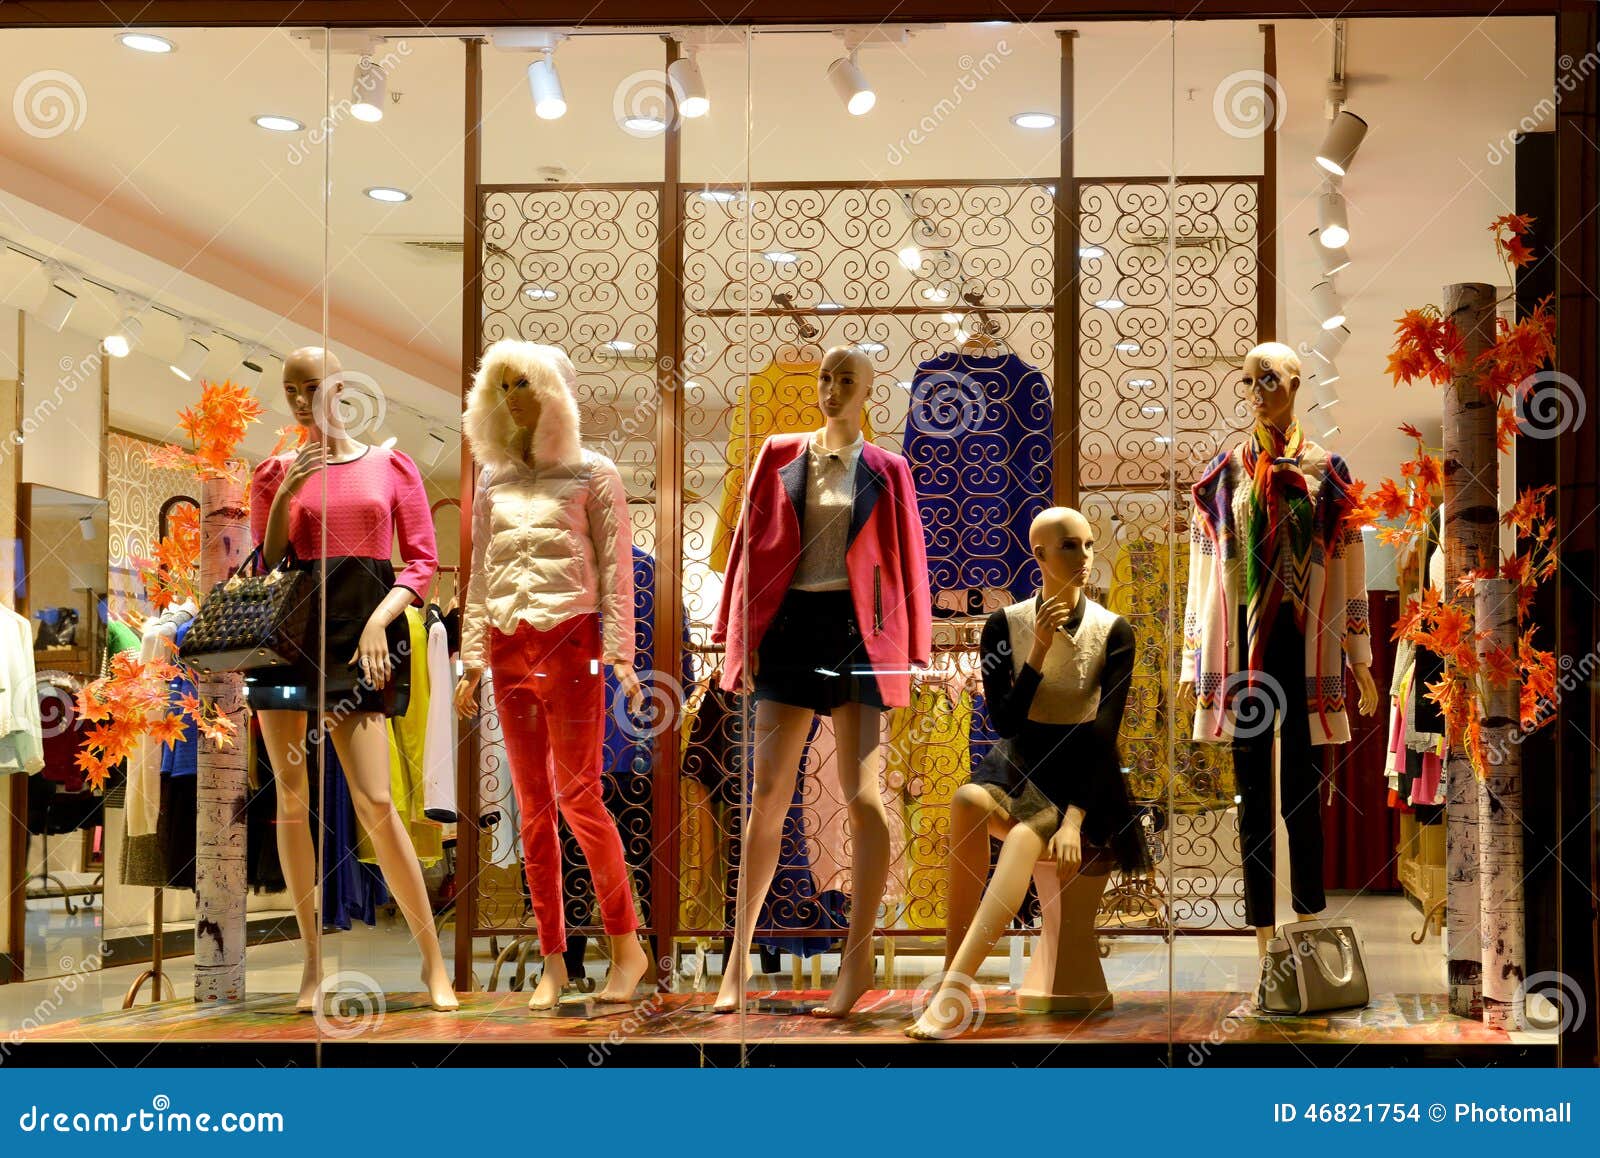 boutique window,fashion clothing store,fashion store window in shopping mall,dress shop window taken at night